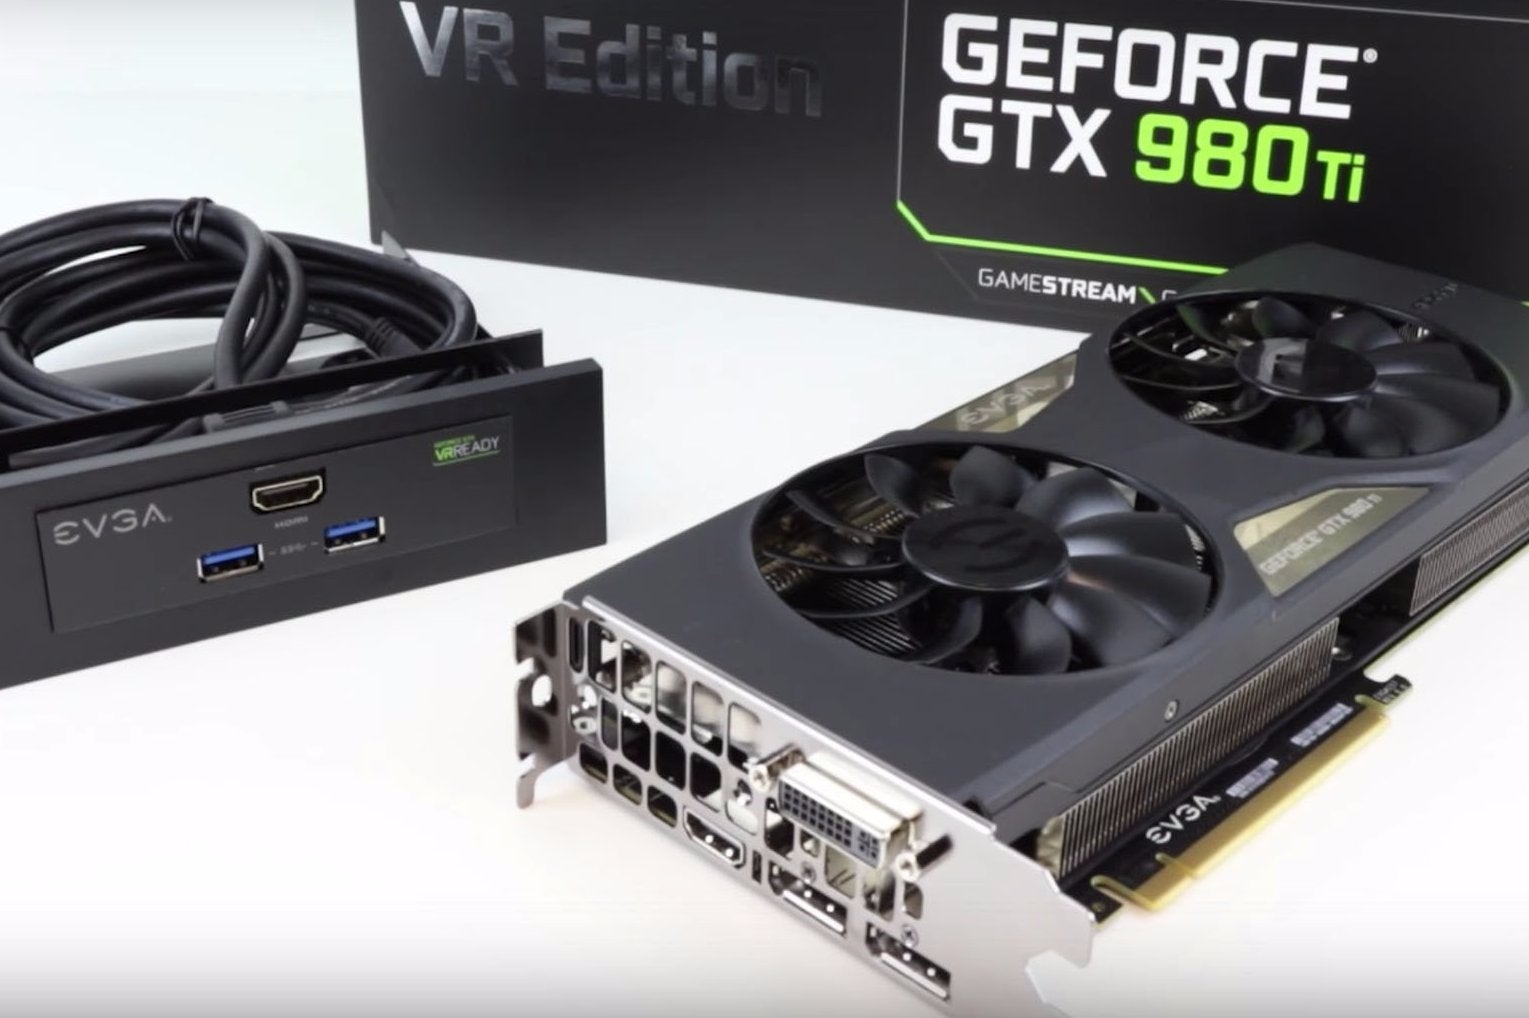 EVGA GeForce GTX 980 Ti VR Edition review | Eurogamer.net